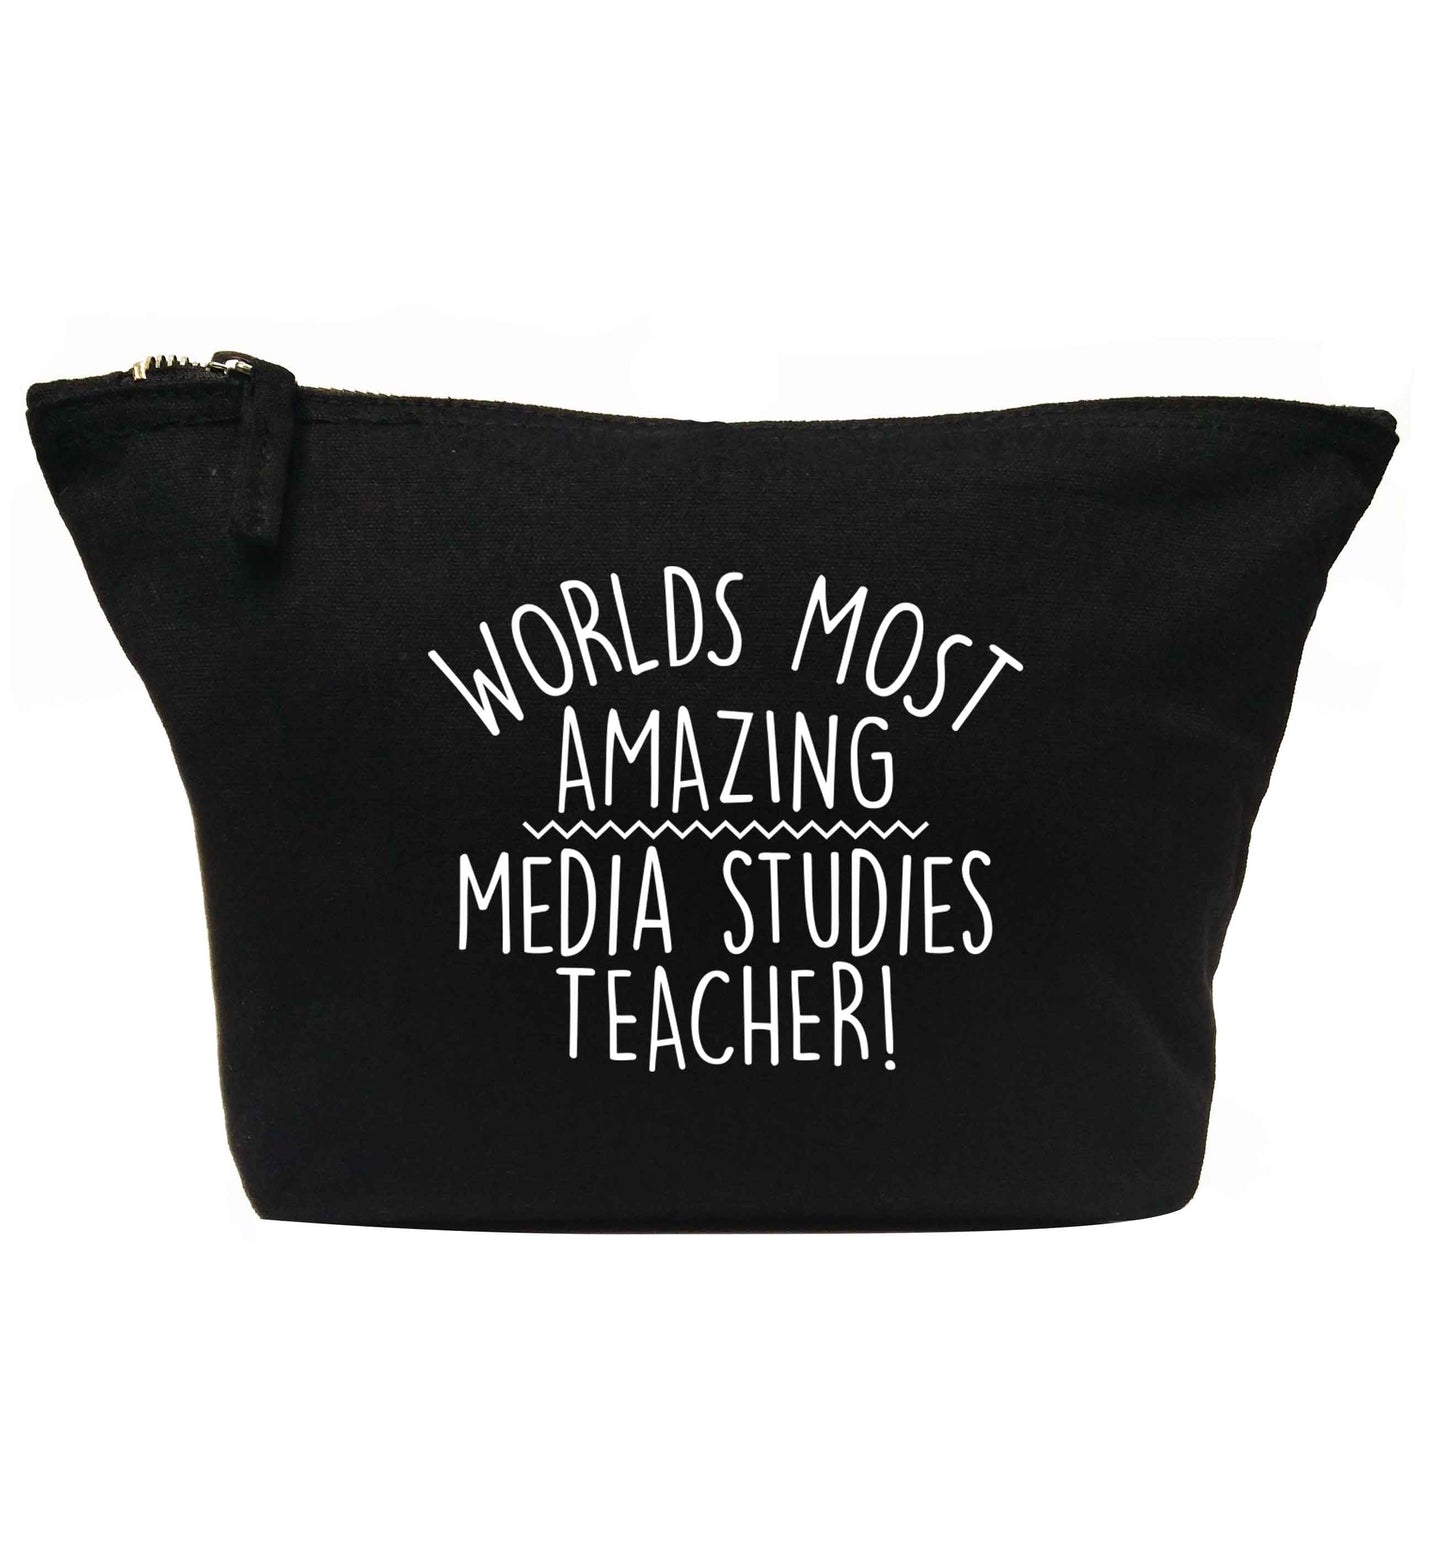 Worlds most amazing media studies teacher | Makeup / wash bag